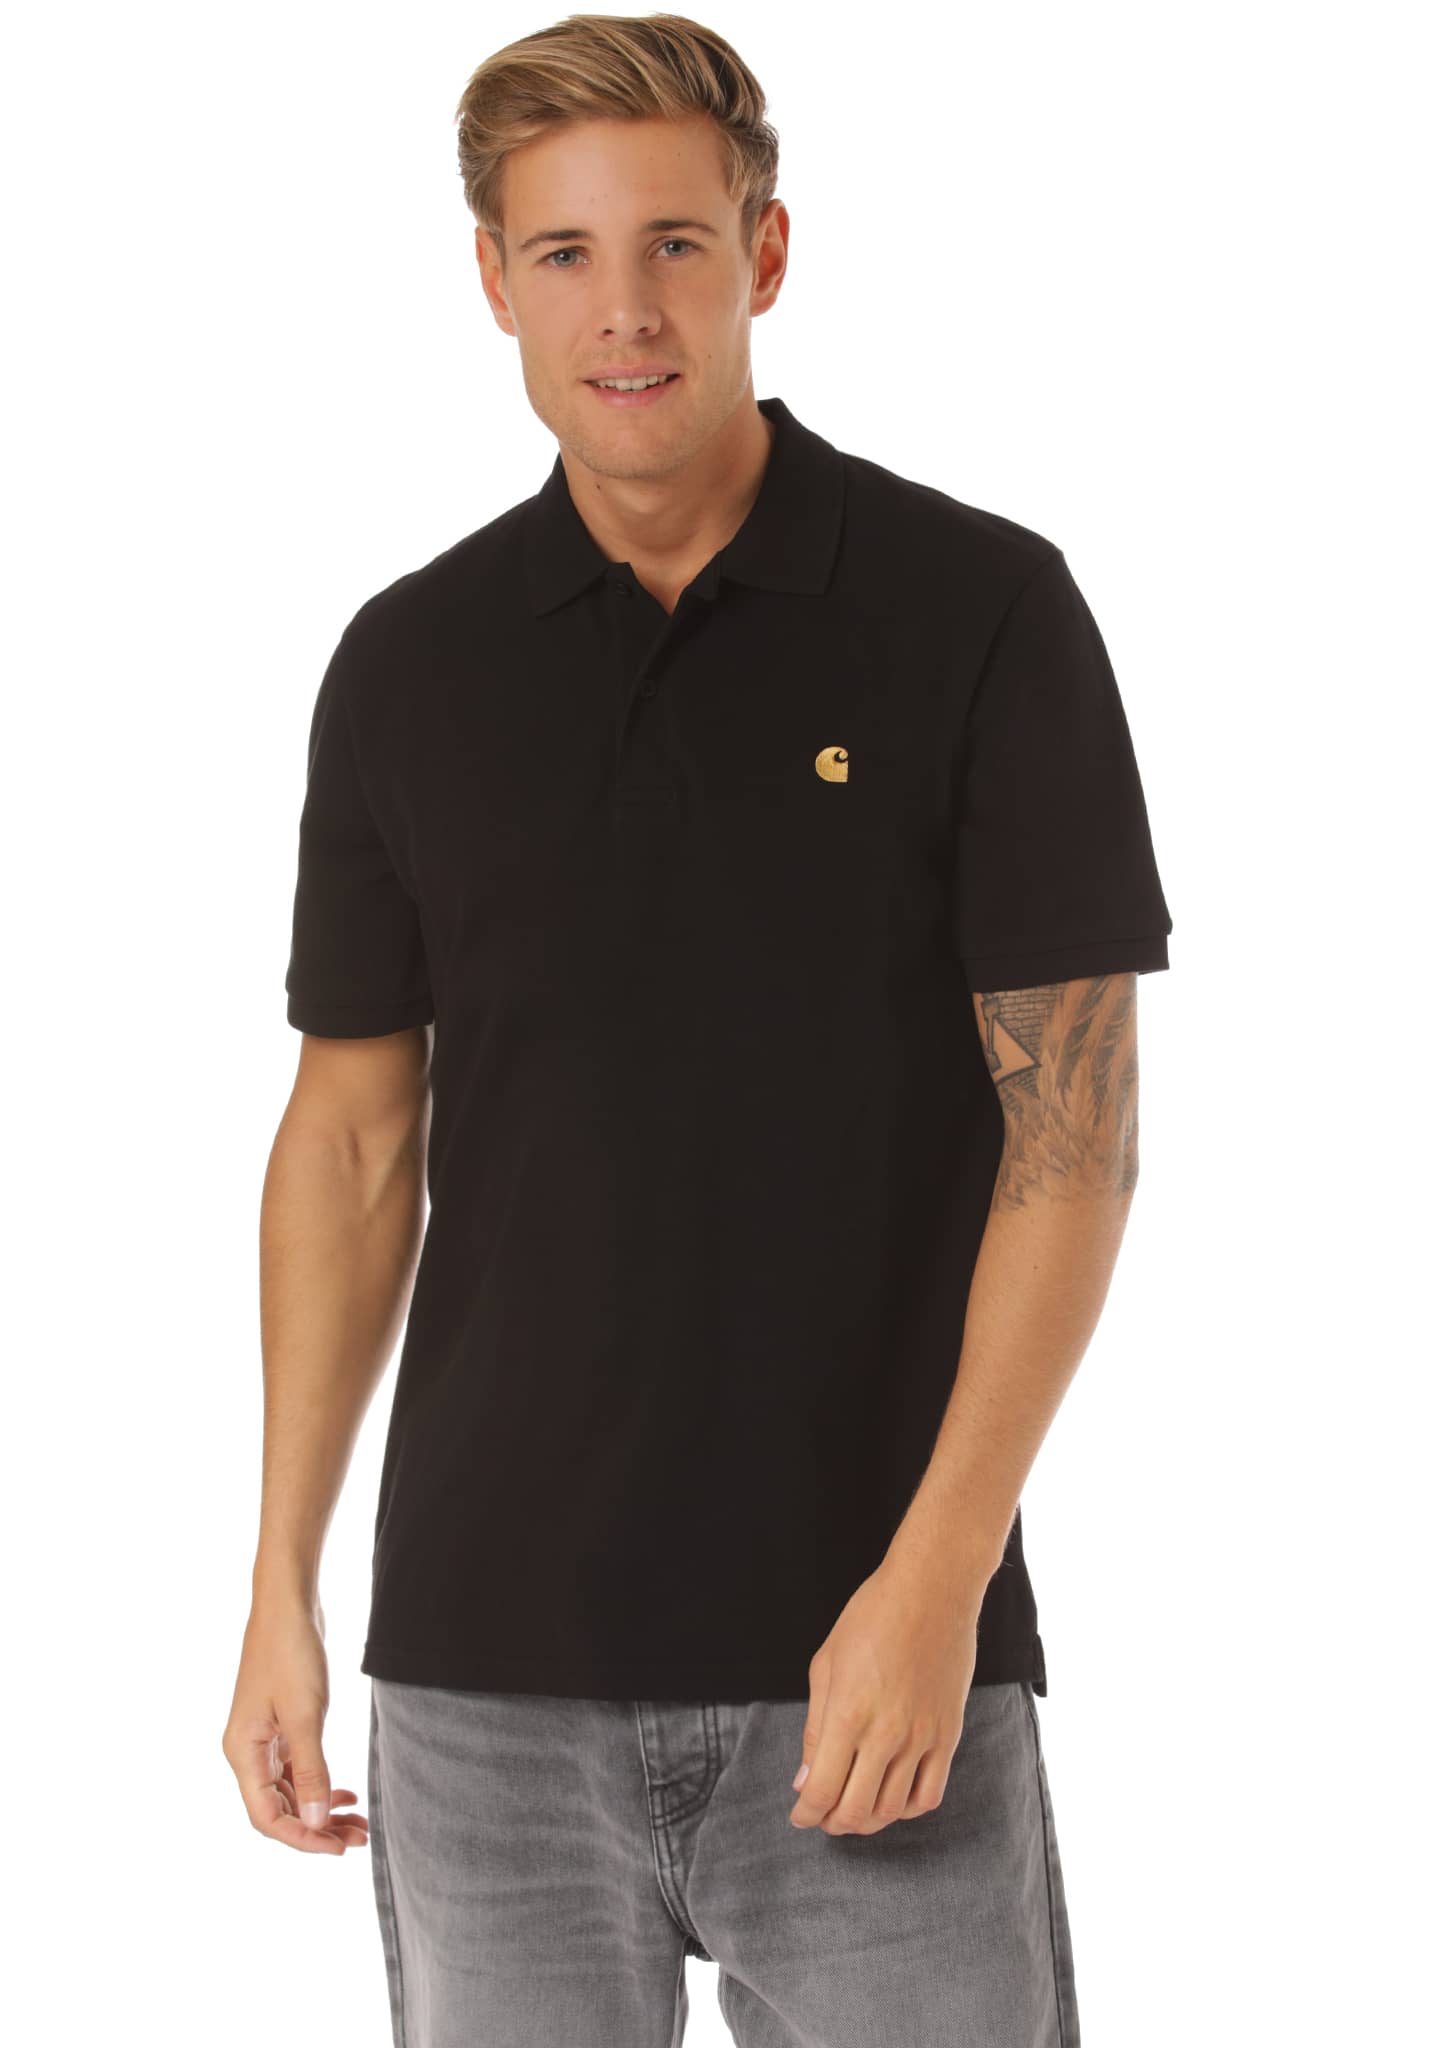 Carhartt WIP Chase Pique T-Shirt schwarz / gold L